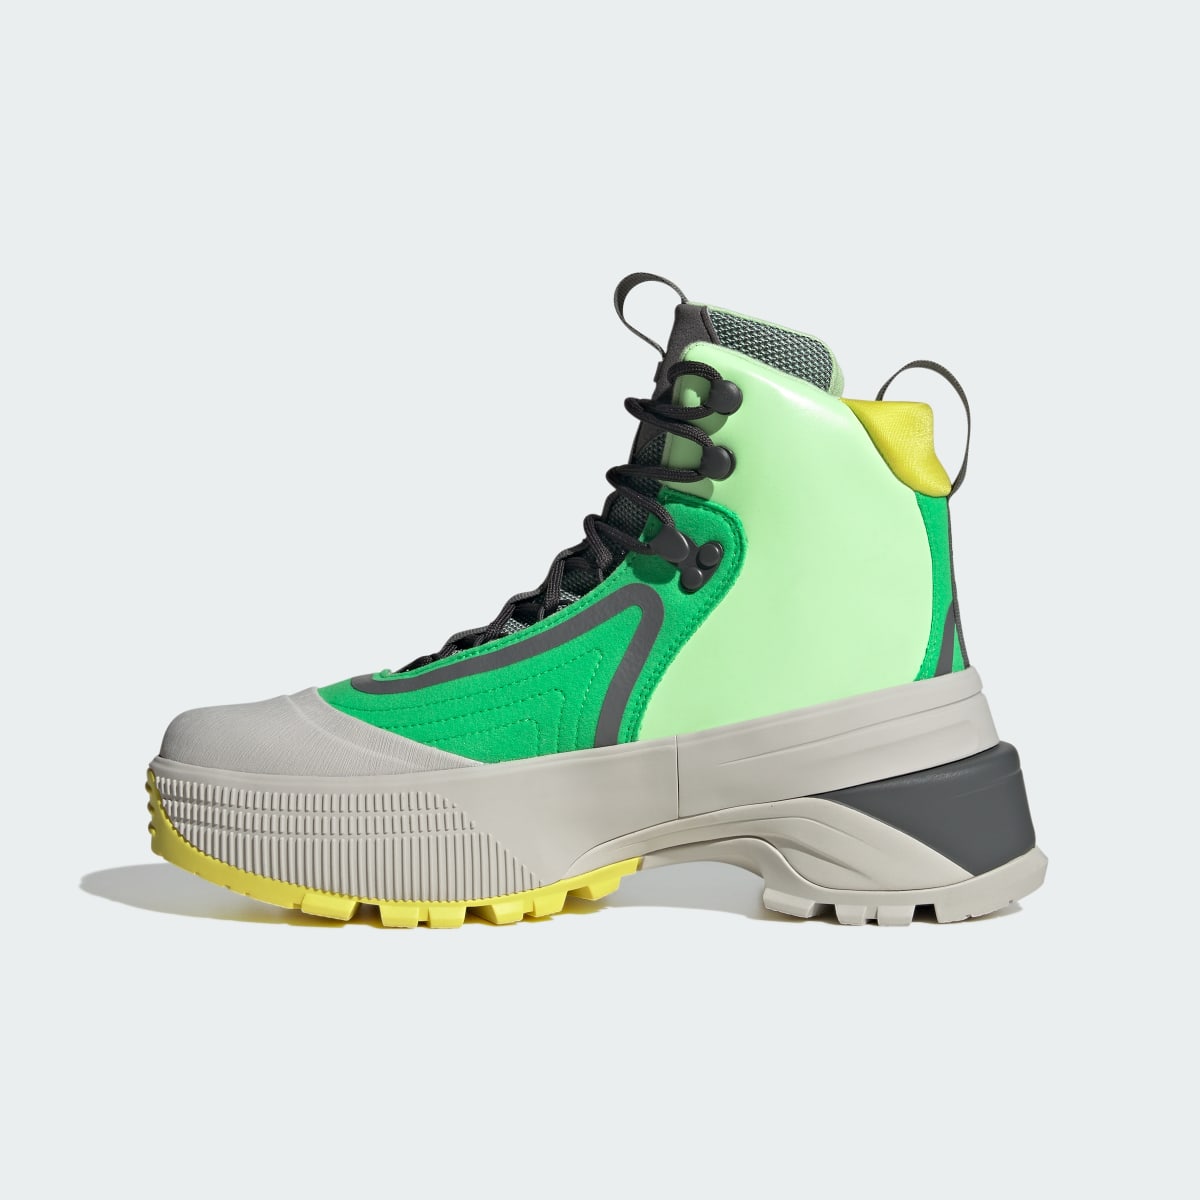 Adidas by Stella McCartney x Terrex Hiking Boots. 7